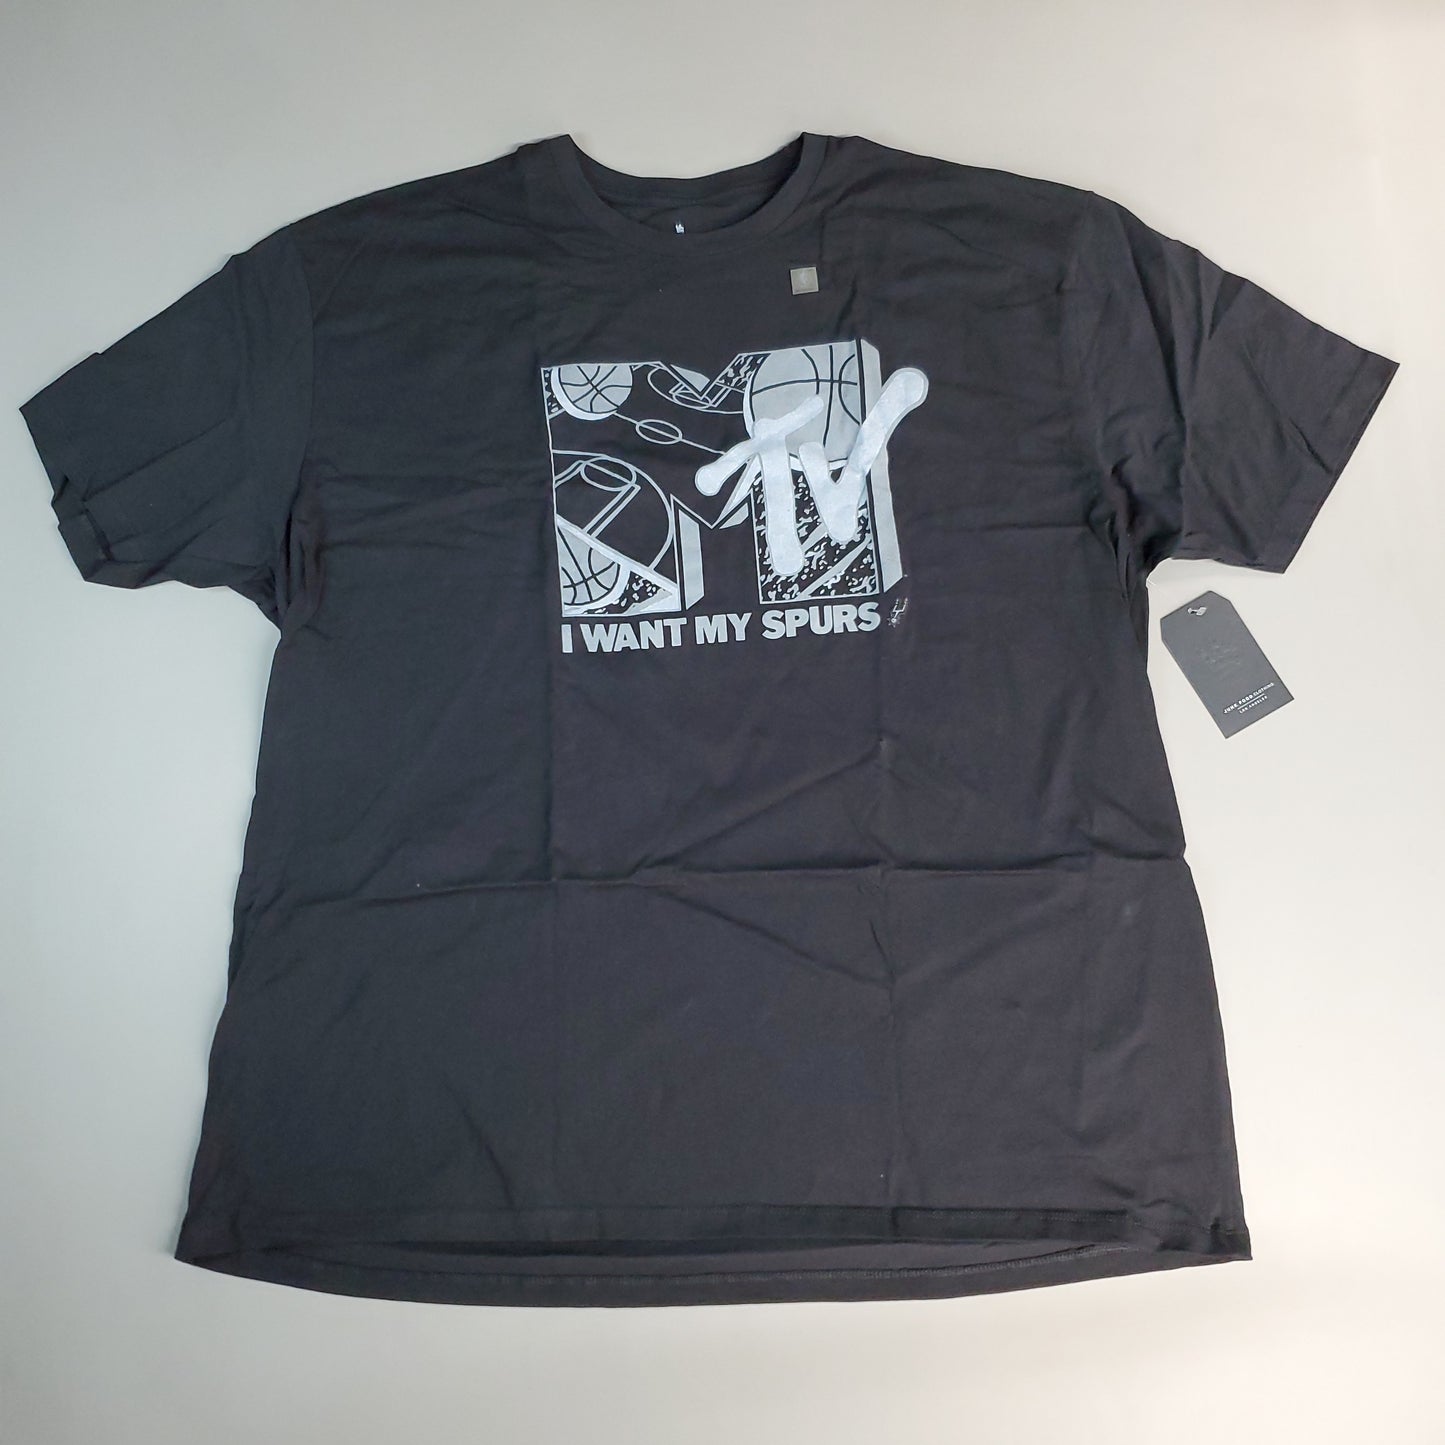 JUNK FOOD NBA MTV Short Sleeve T-Shirt I Want My Spurs Top Men's Sz 3XL Black (New)